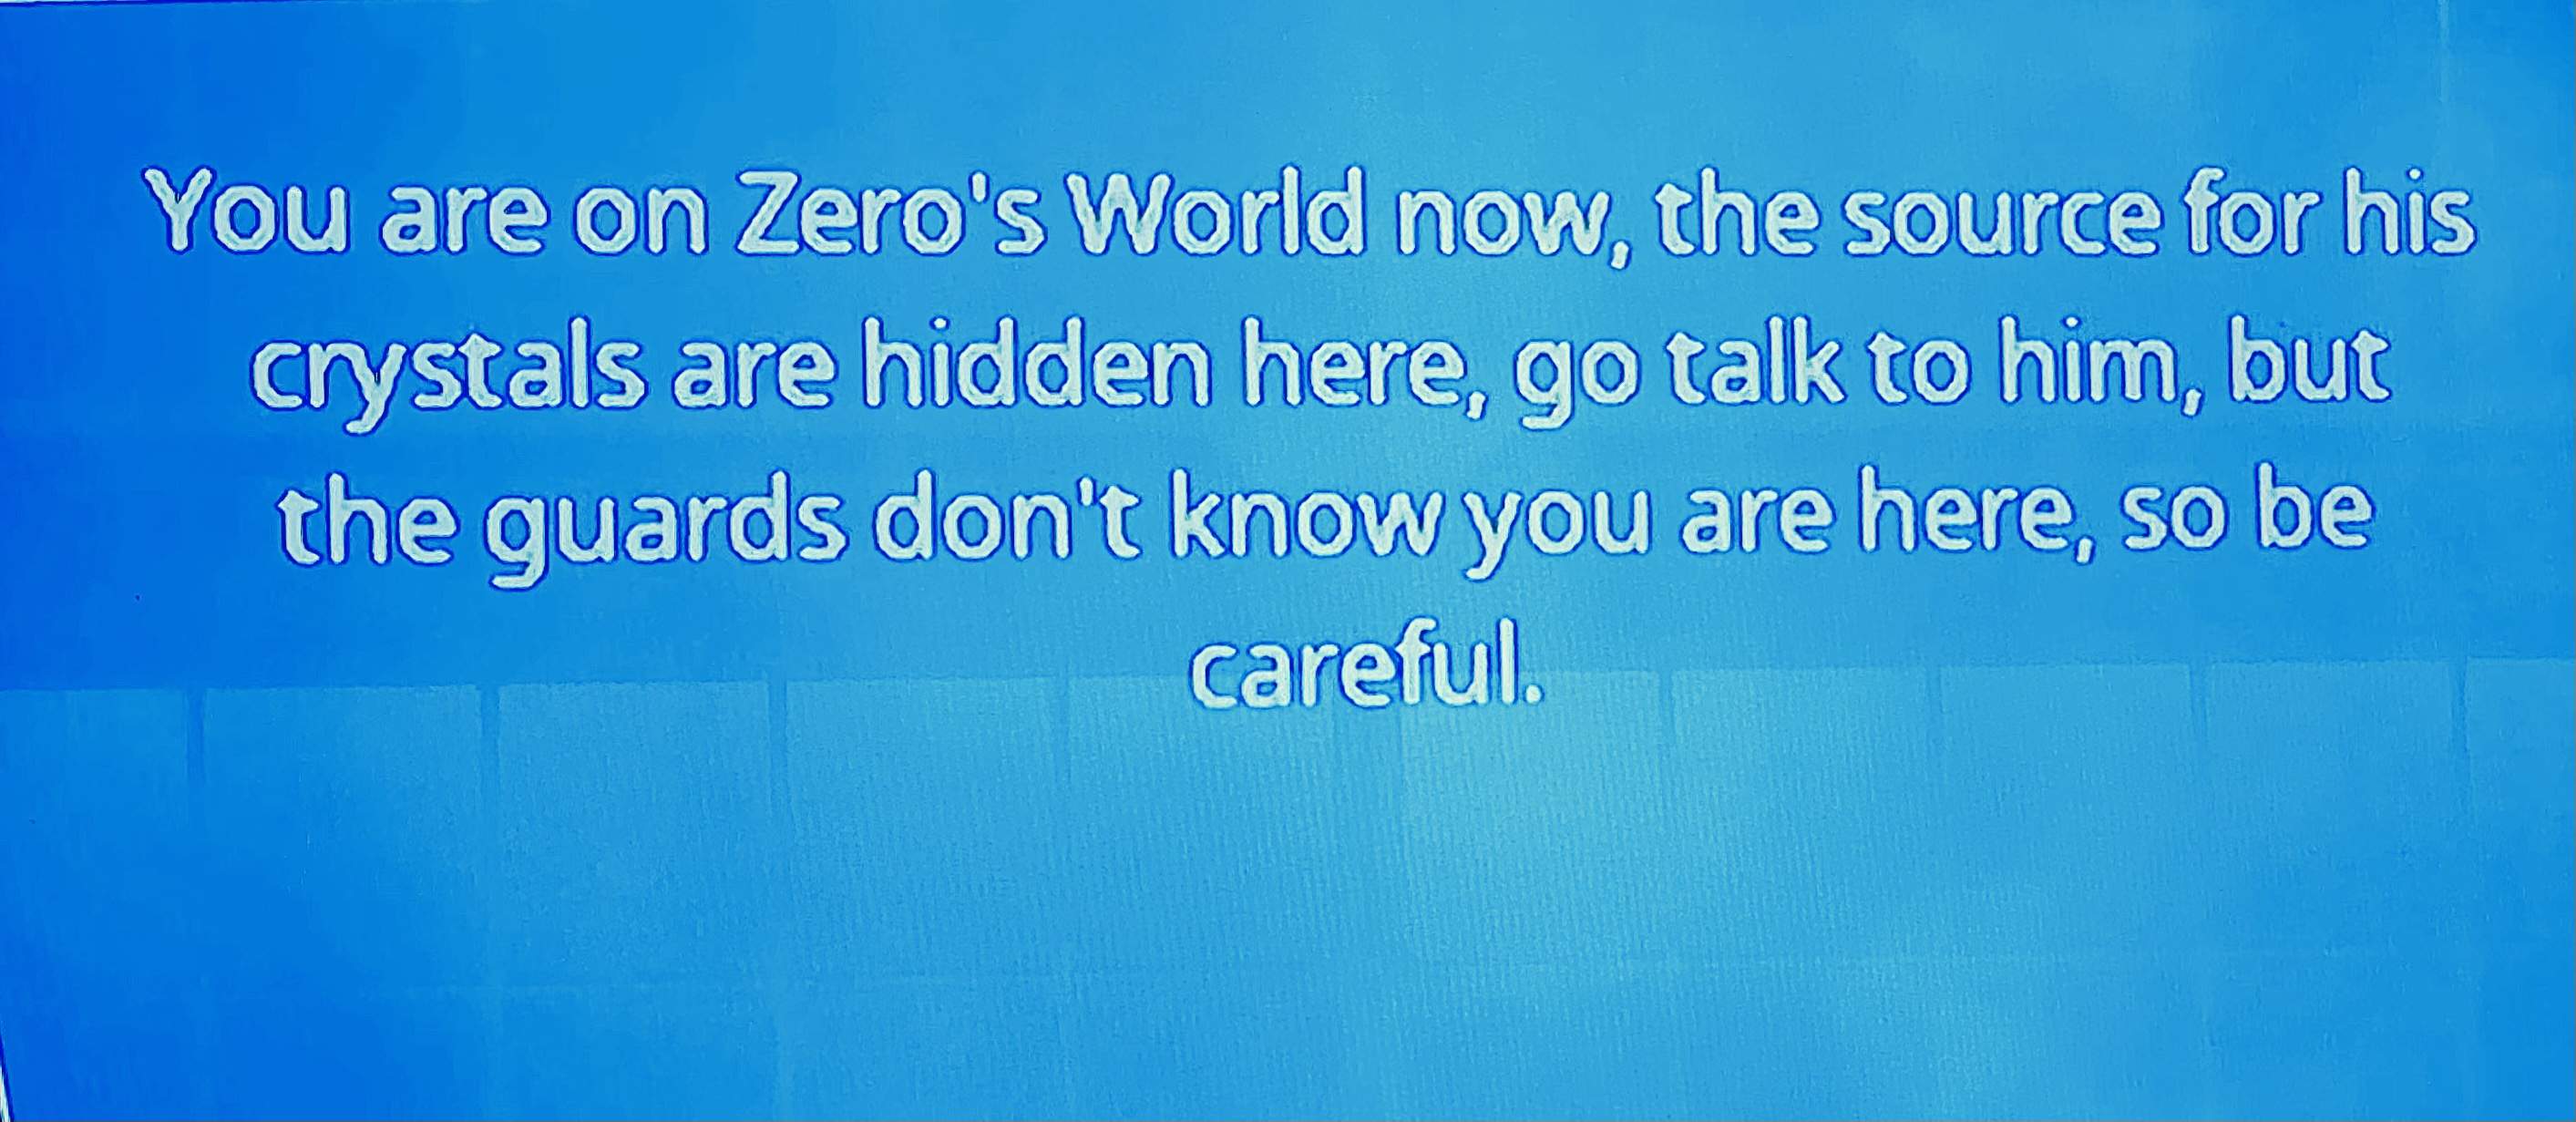 ZERO'S SECRETS PART 3 - ZERO'S WORLD image 3